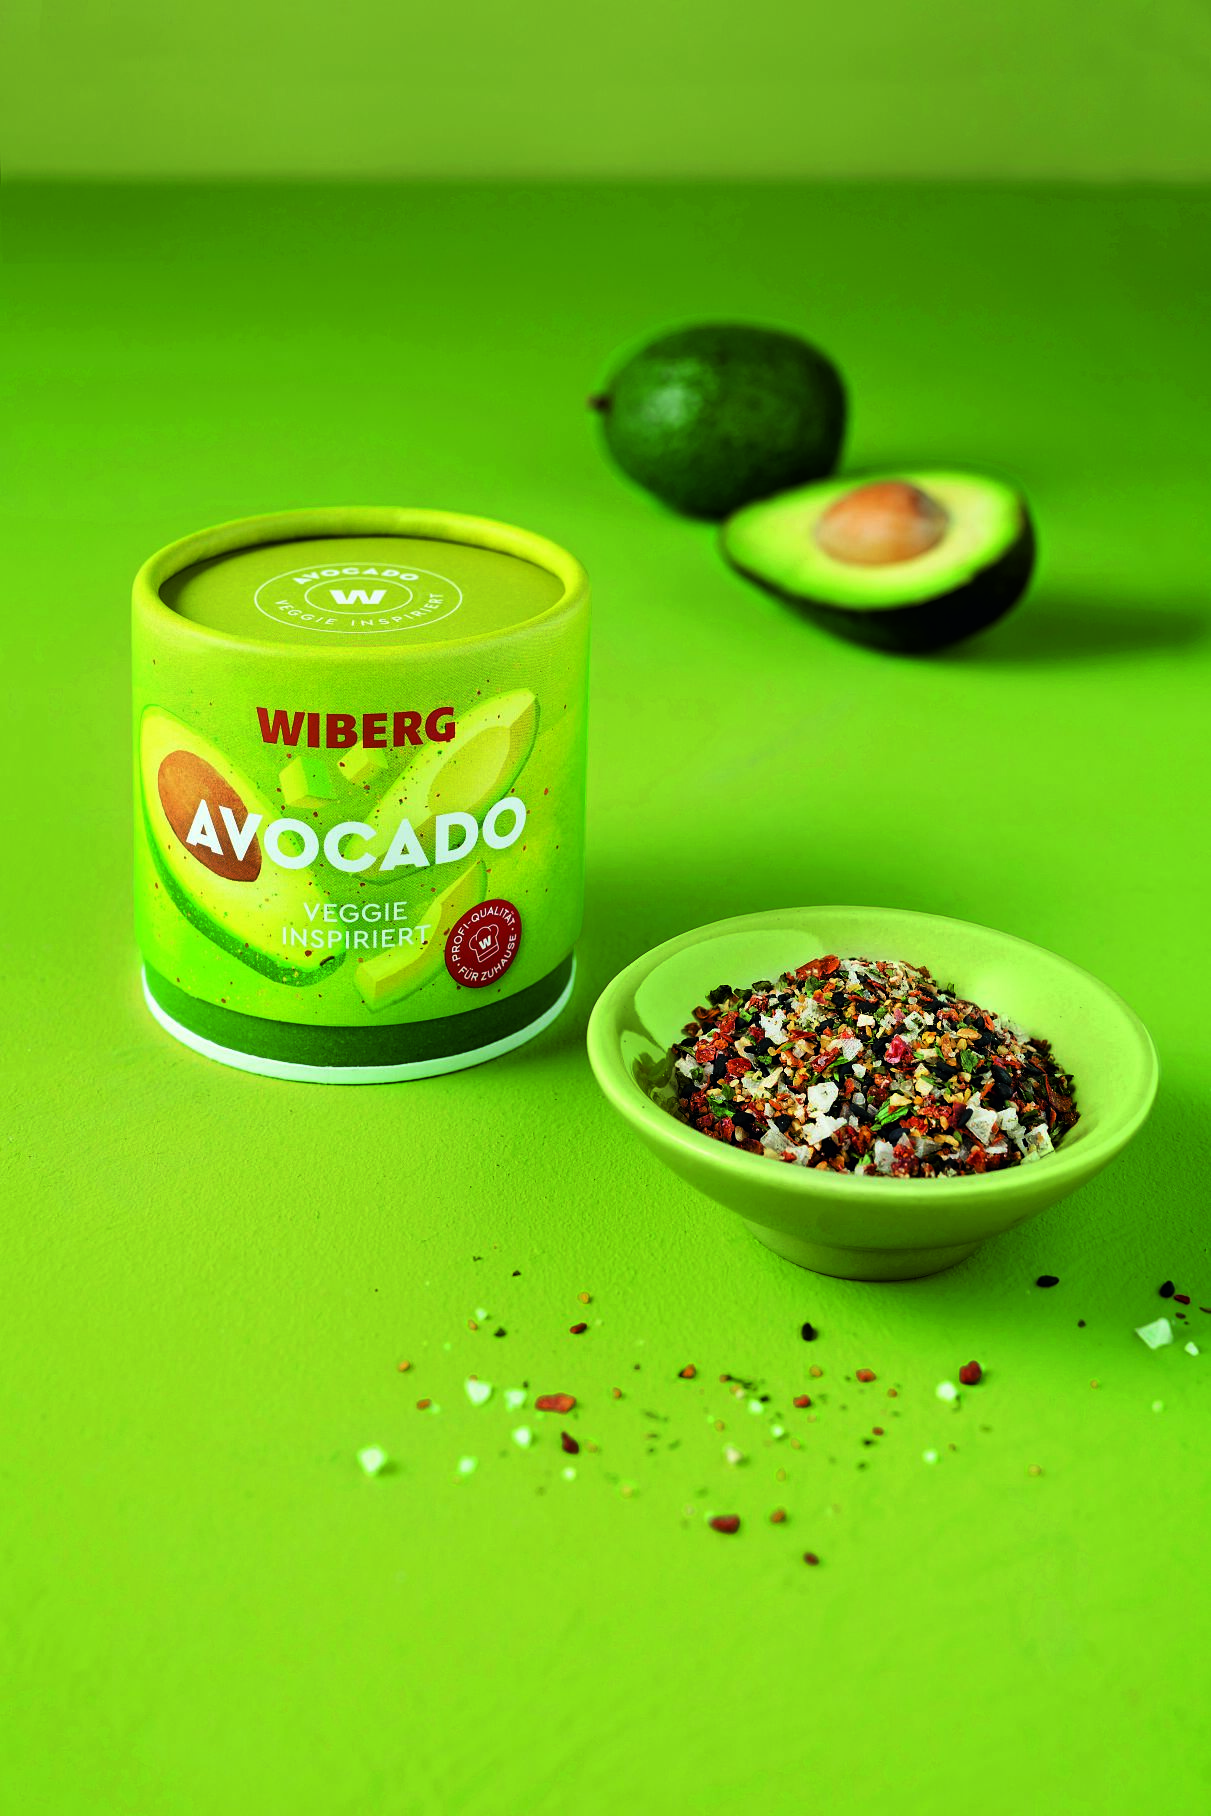 WOW Avocado - veggie inspiriert